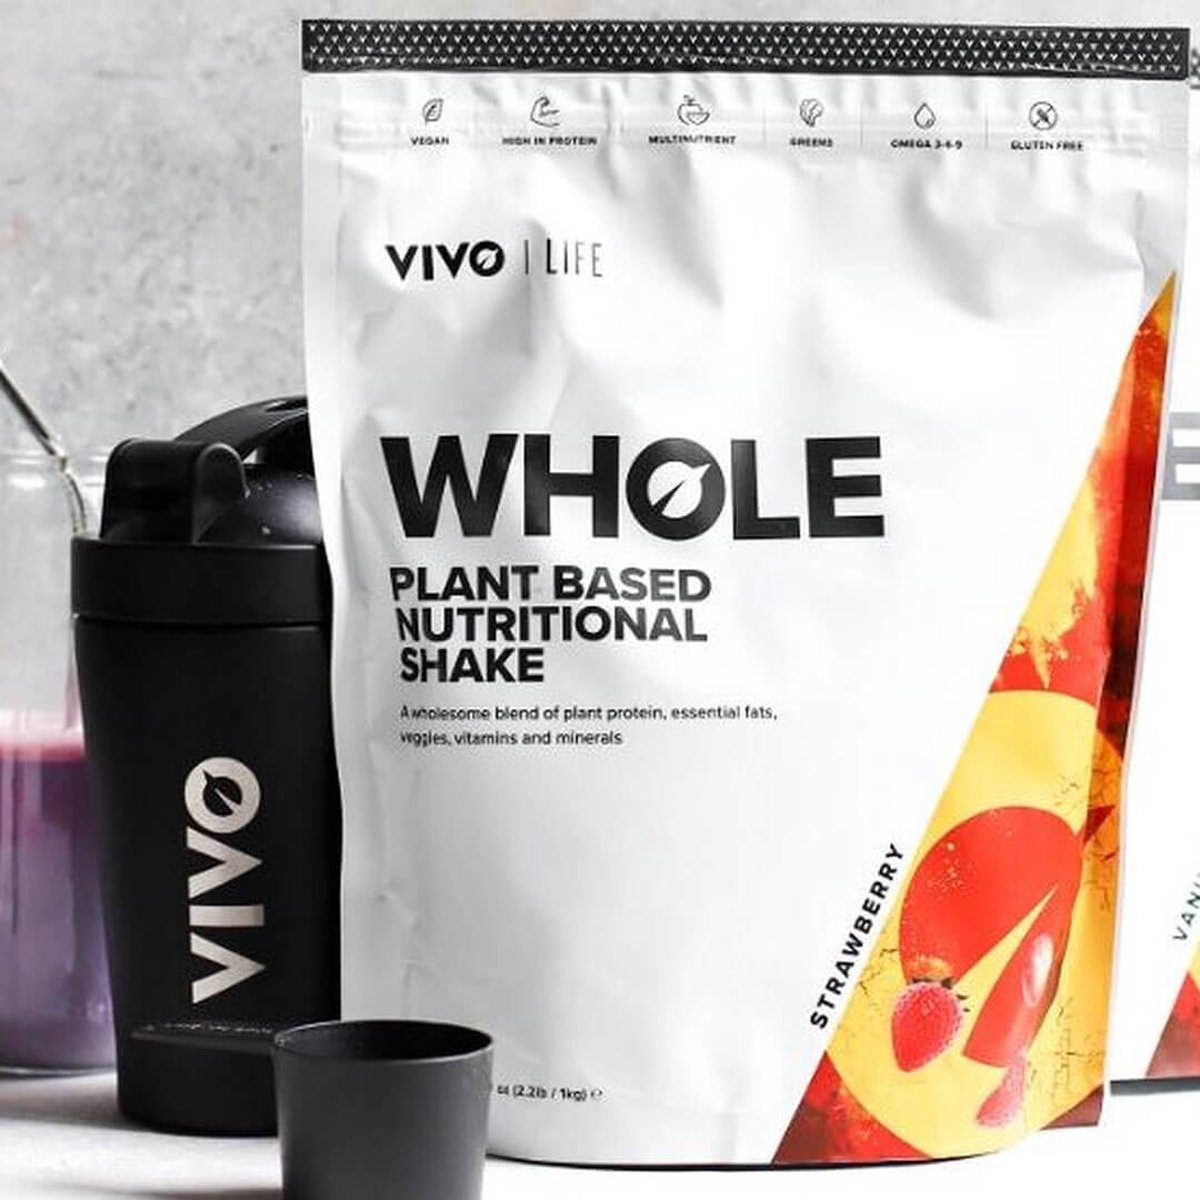 WHOLE plant based nutritional shake - Aardbei 1kg